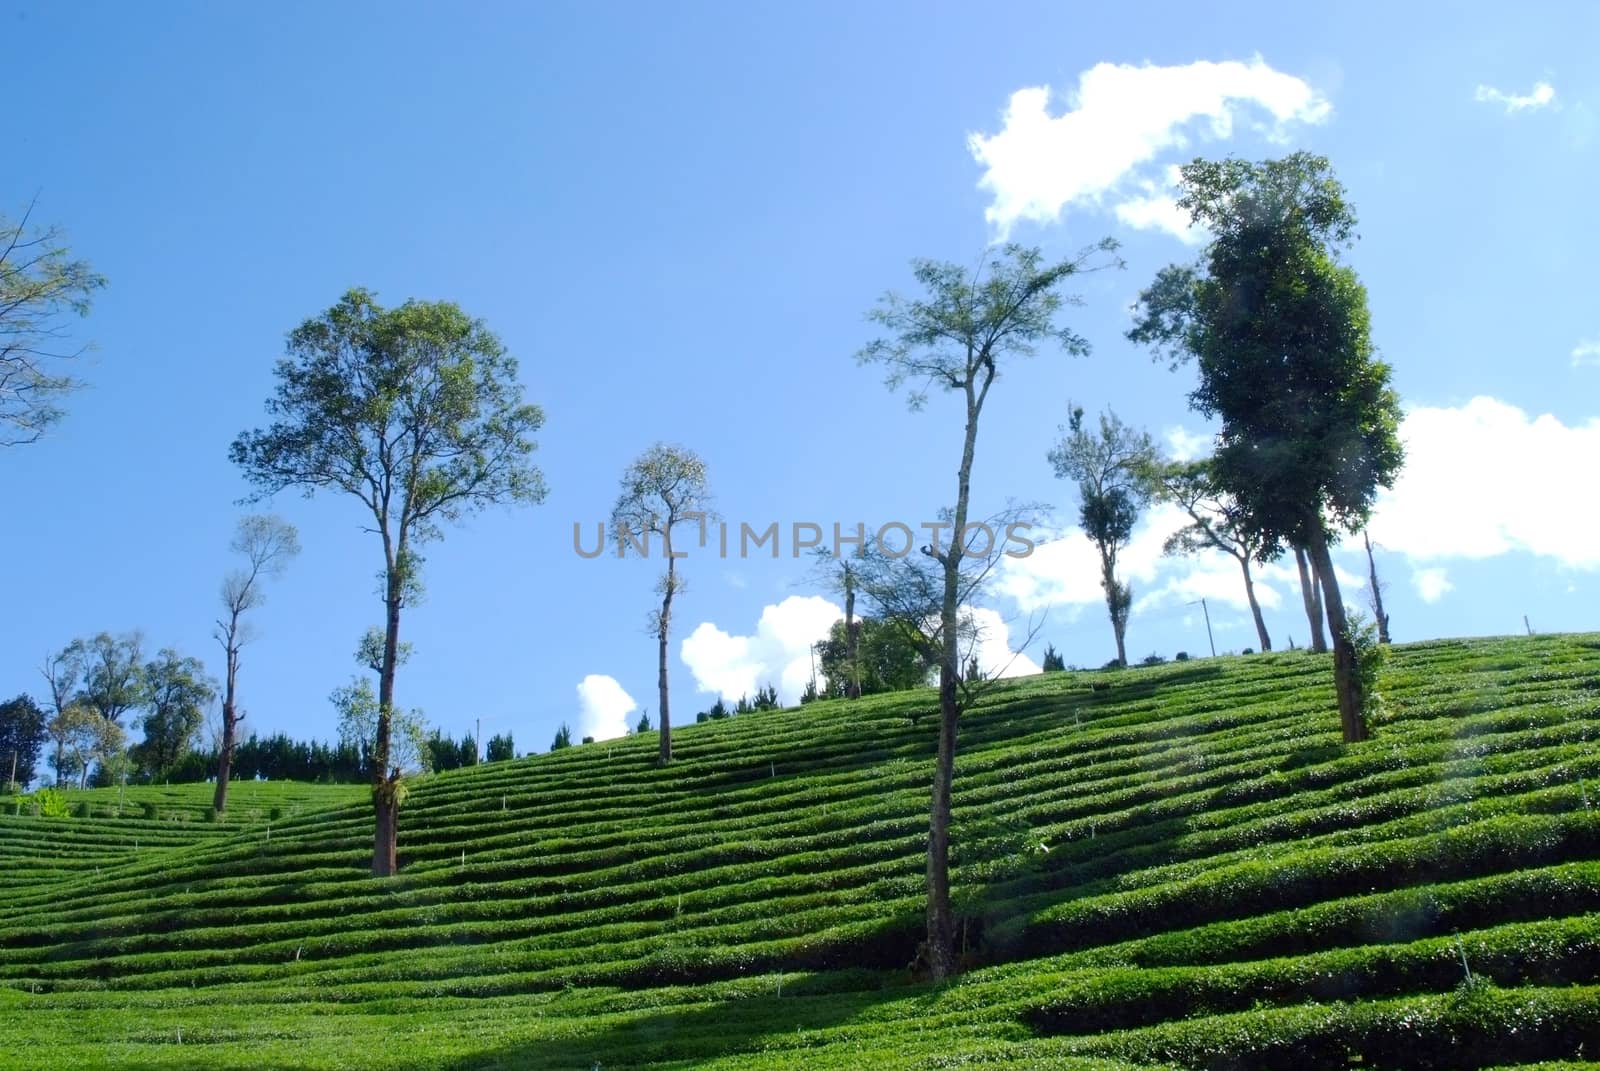 Tea Plantation Landscape 4 by ideation90